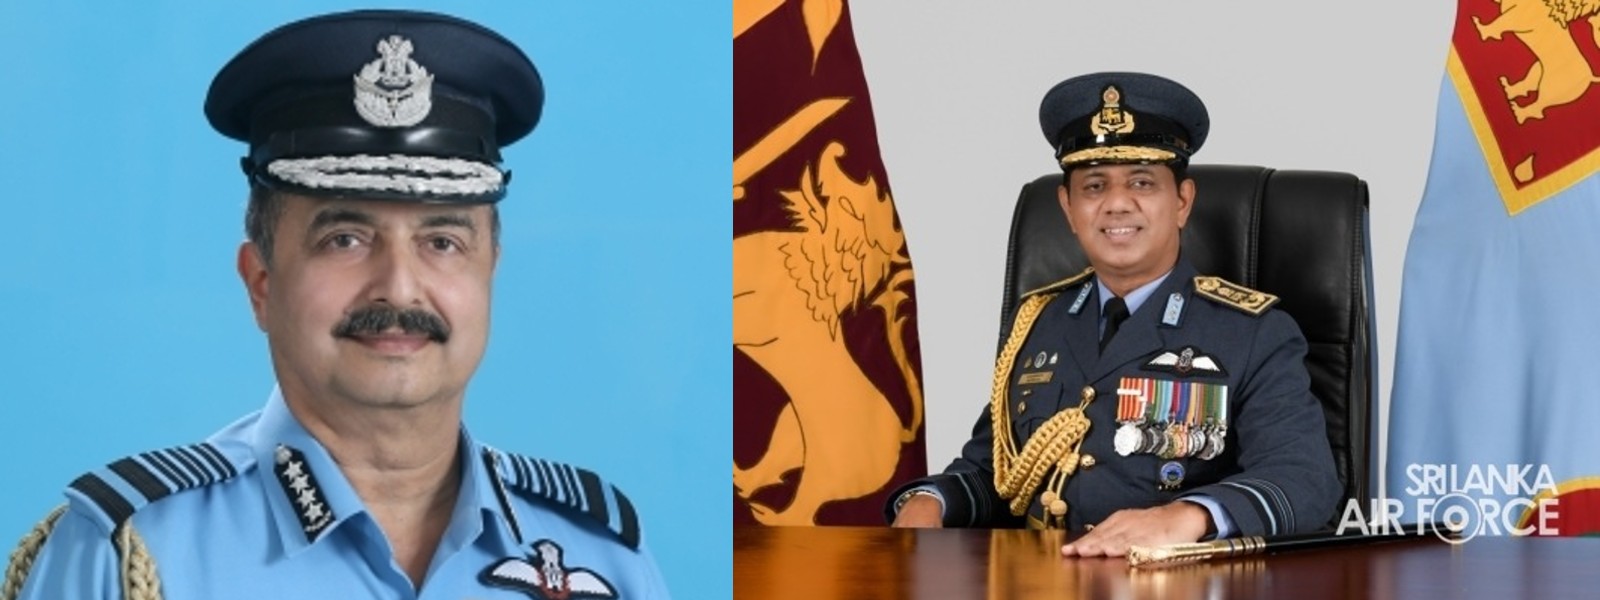 SLAF Commander congratulates new Indian Air Chief